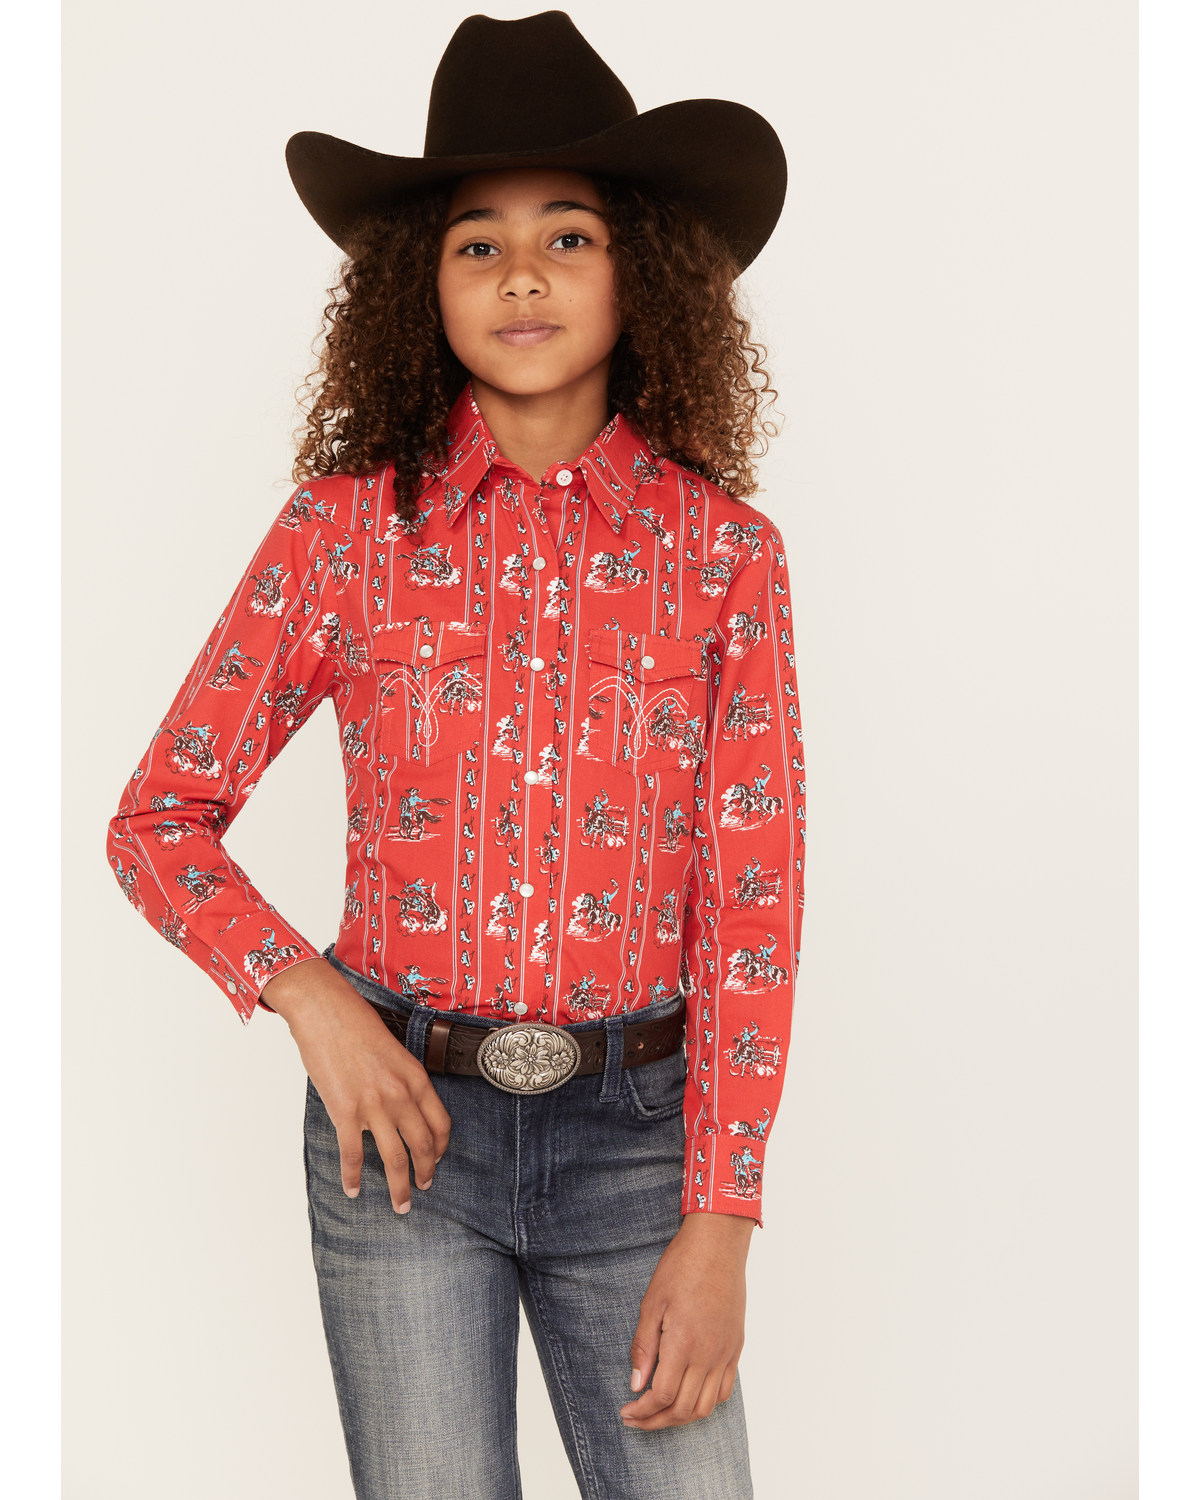 Panhandle Girls' Striped Cowboy Print Long Sleeve Pearl Snap Western Shirt